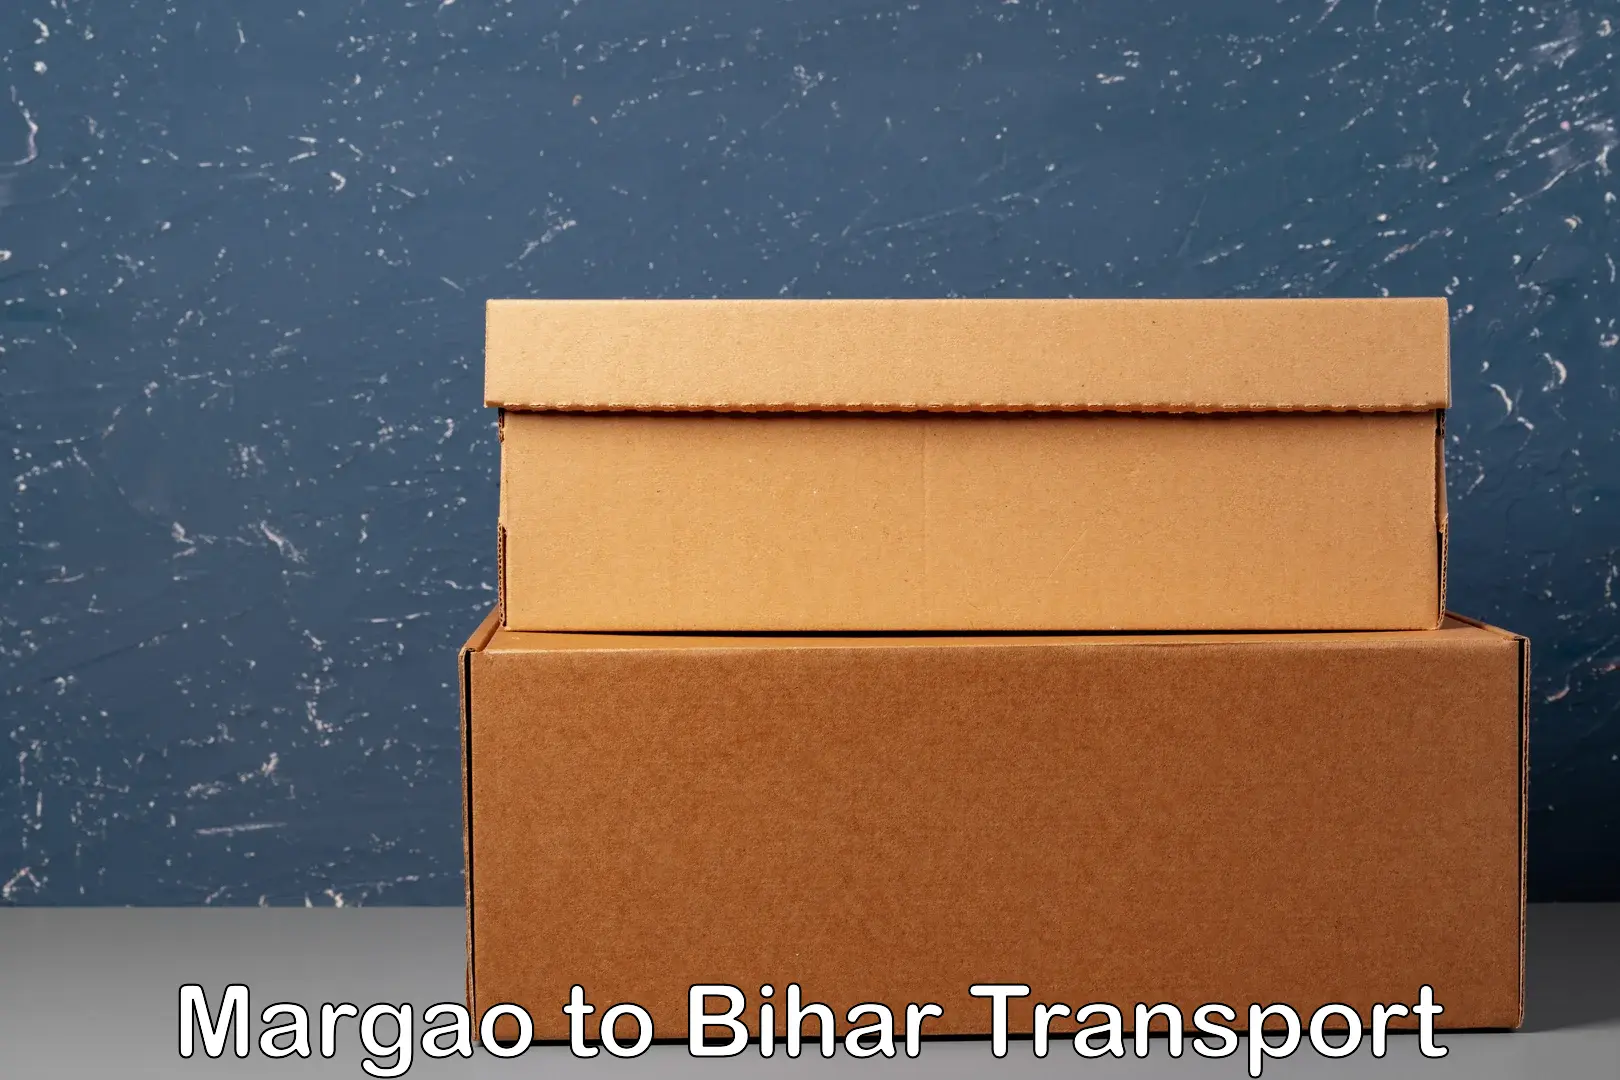 Truck transport companies in India Margao to Piro